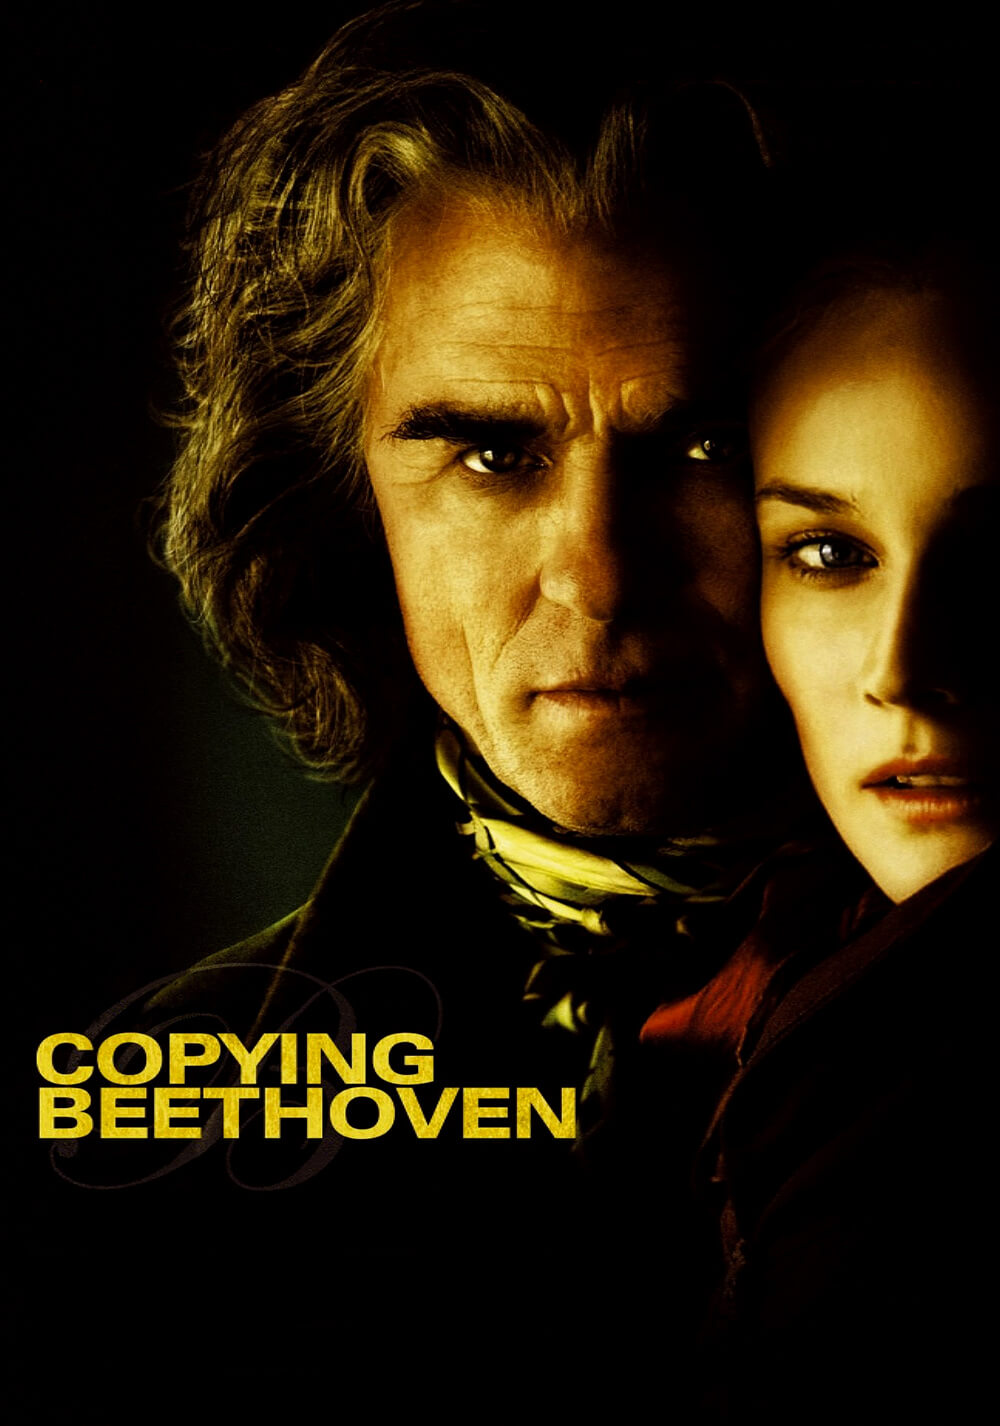 رونویسی برای بتهوون (Copying Beethoven)